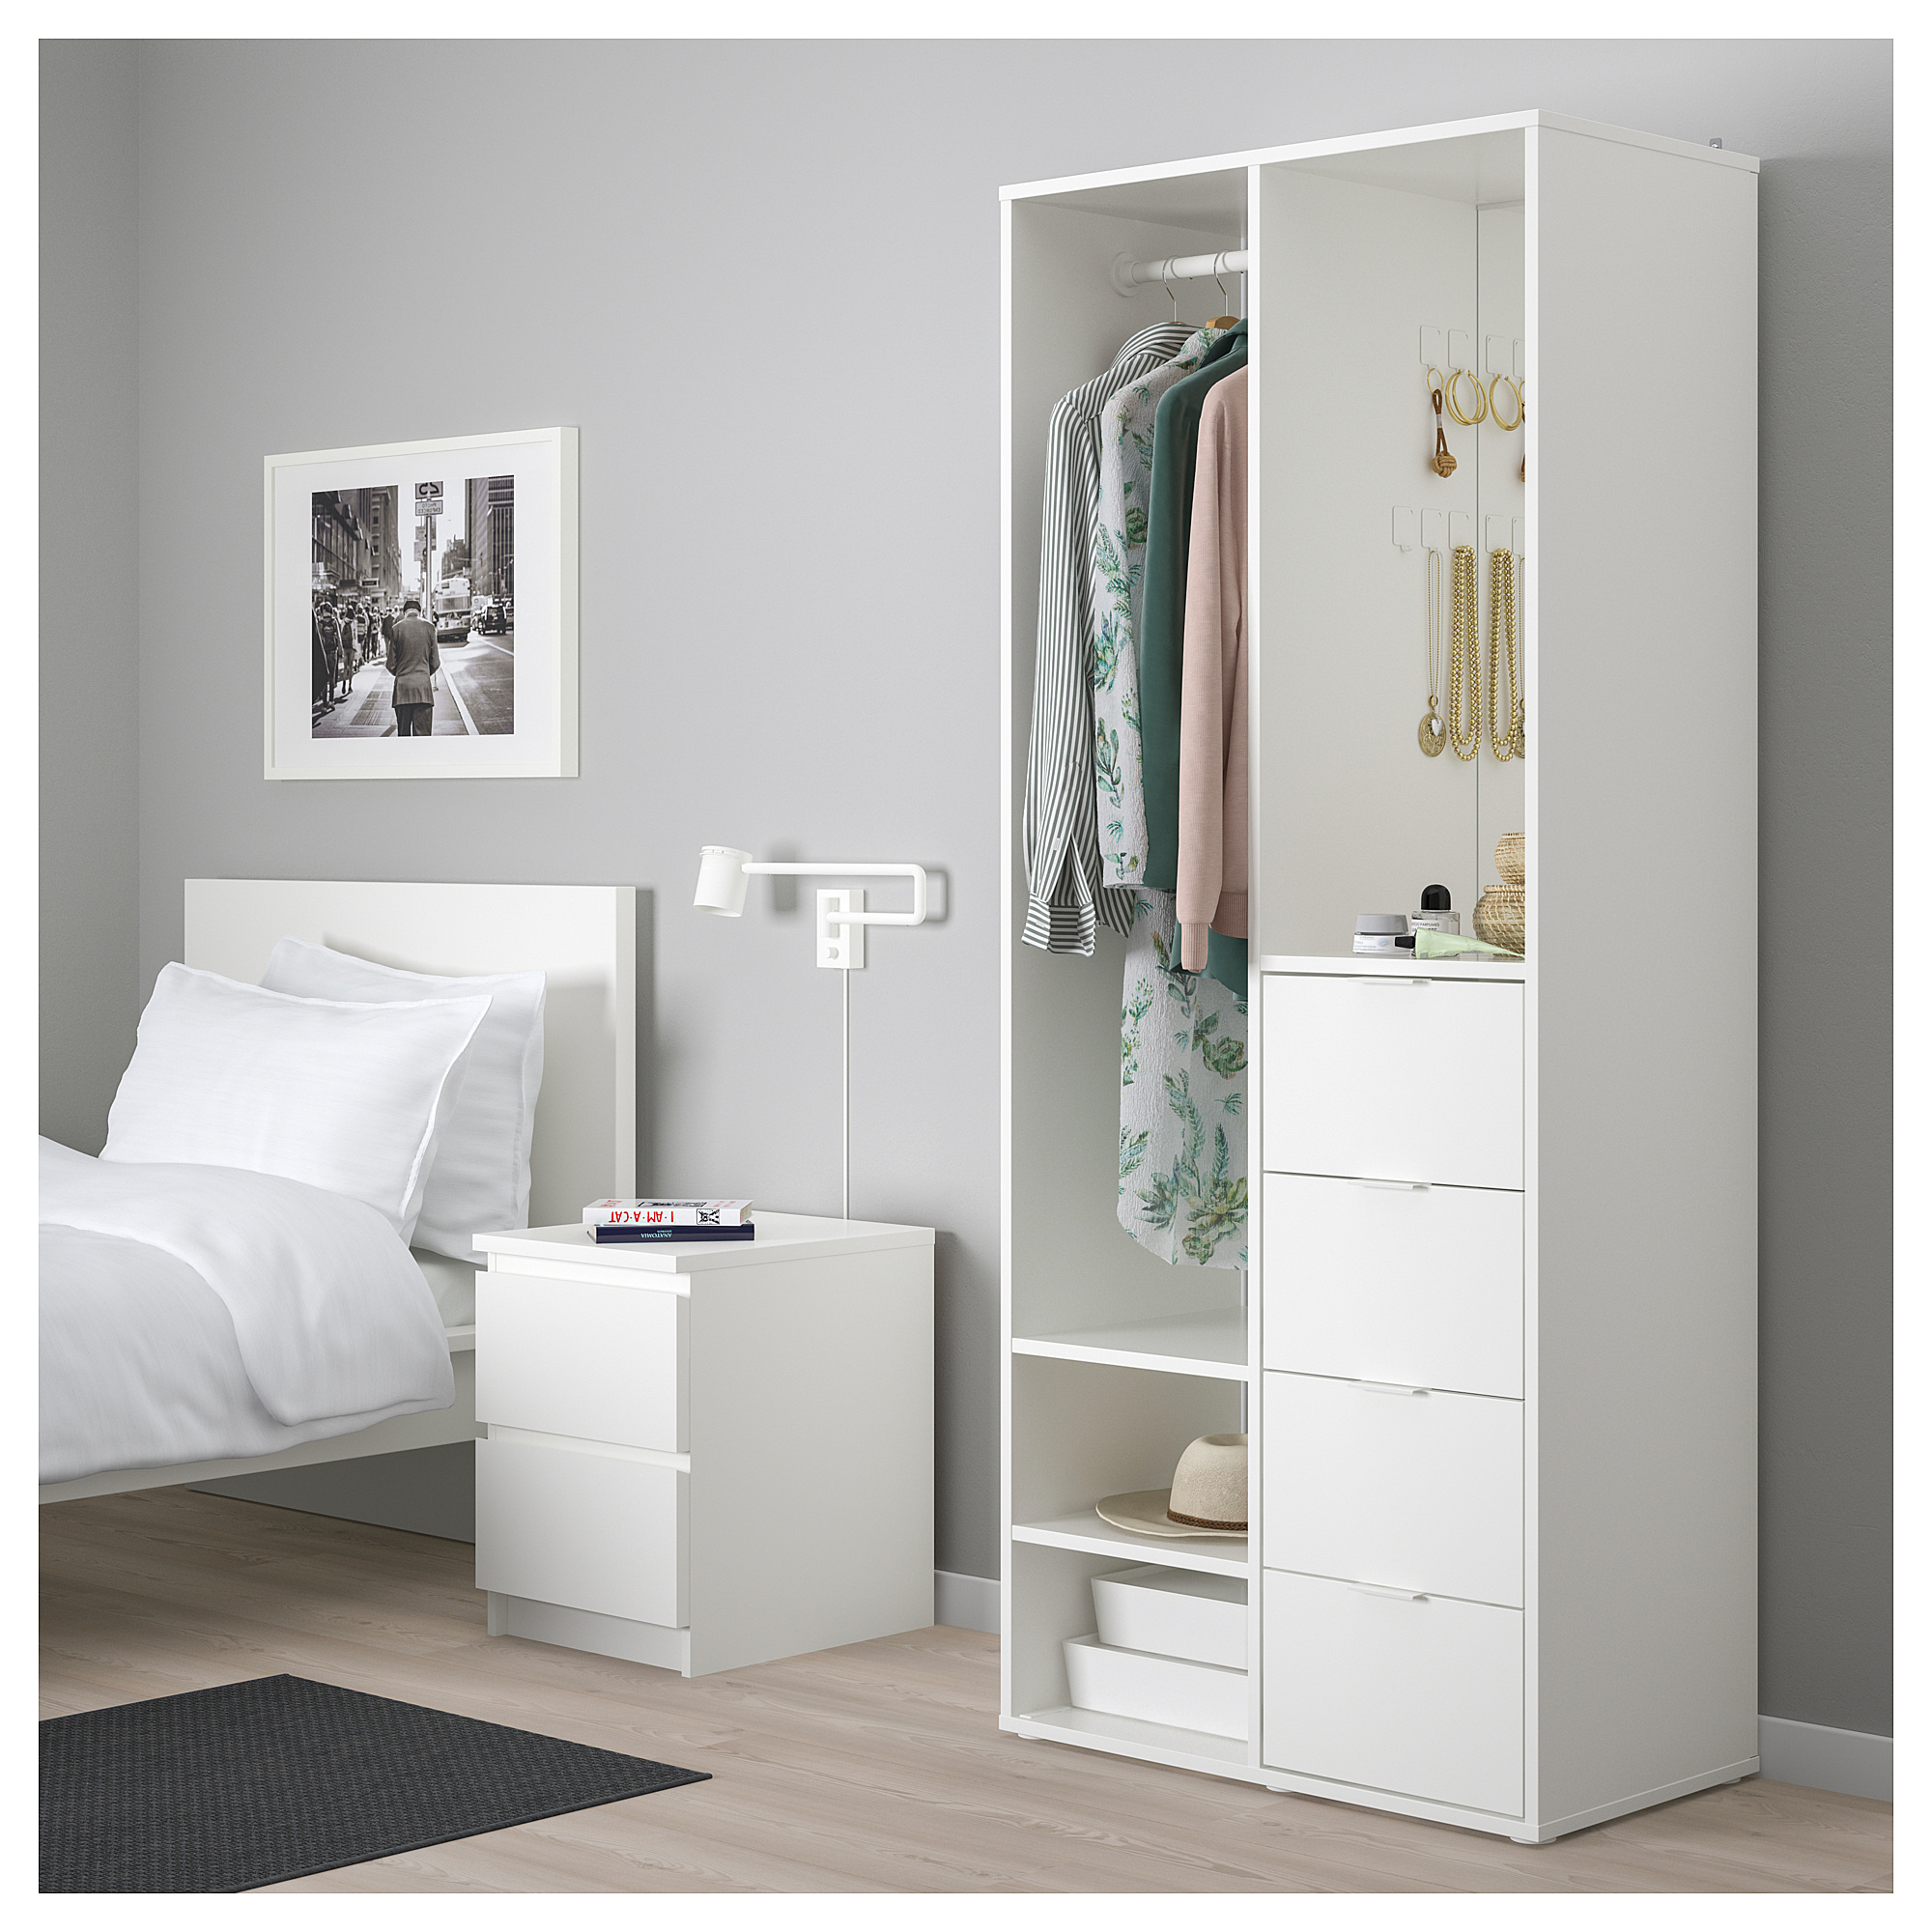 SUNDLANDET - open wardrobe, white | IKEA Hong Kong